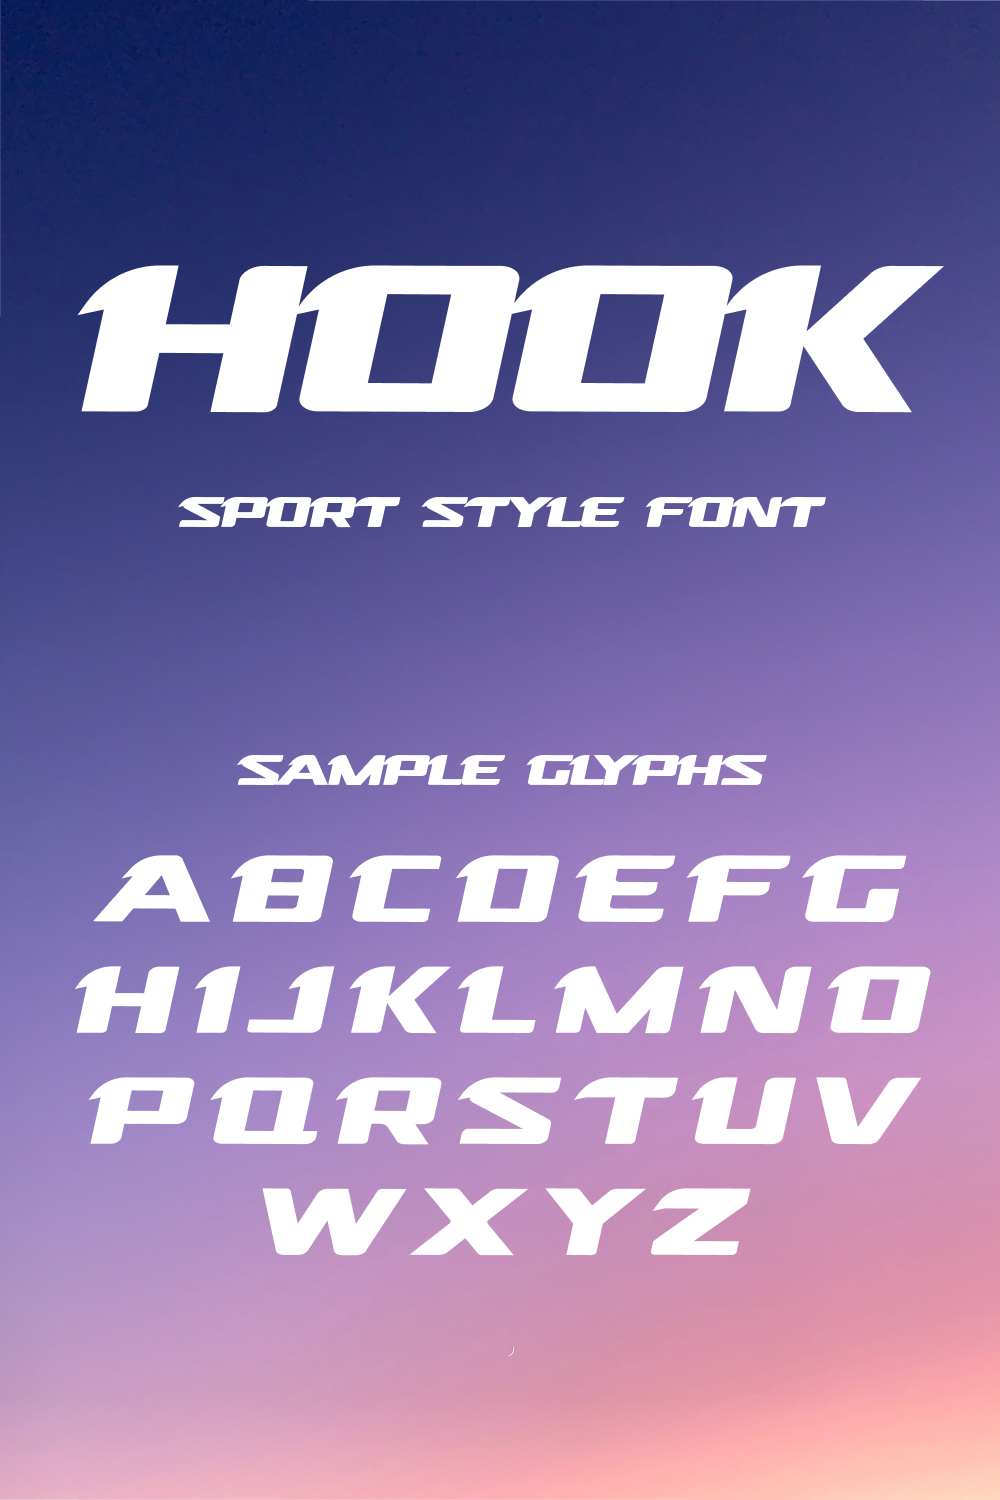 Hook font of pinterest.